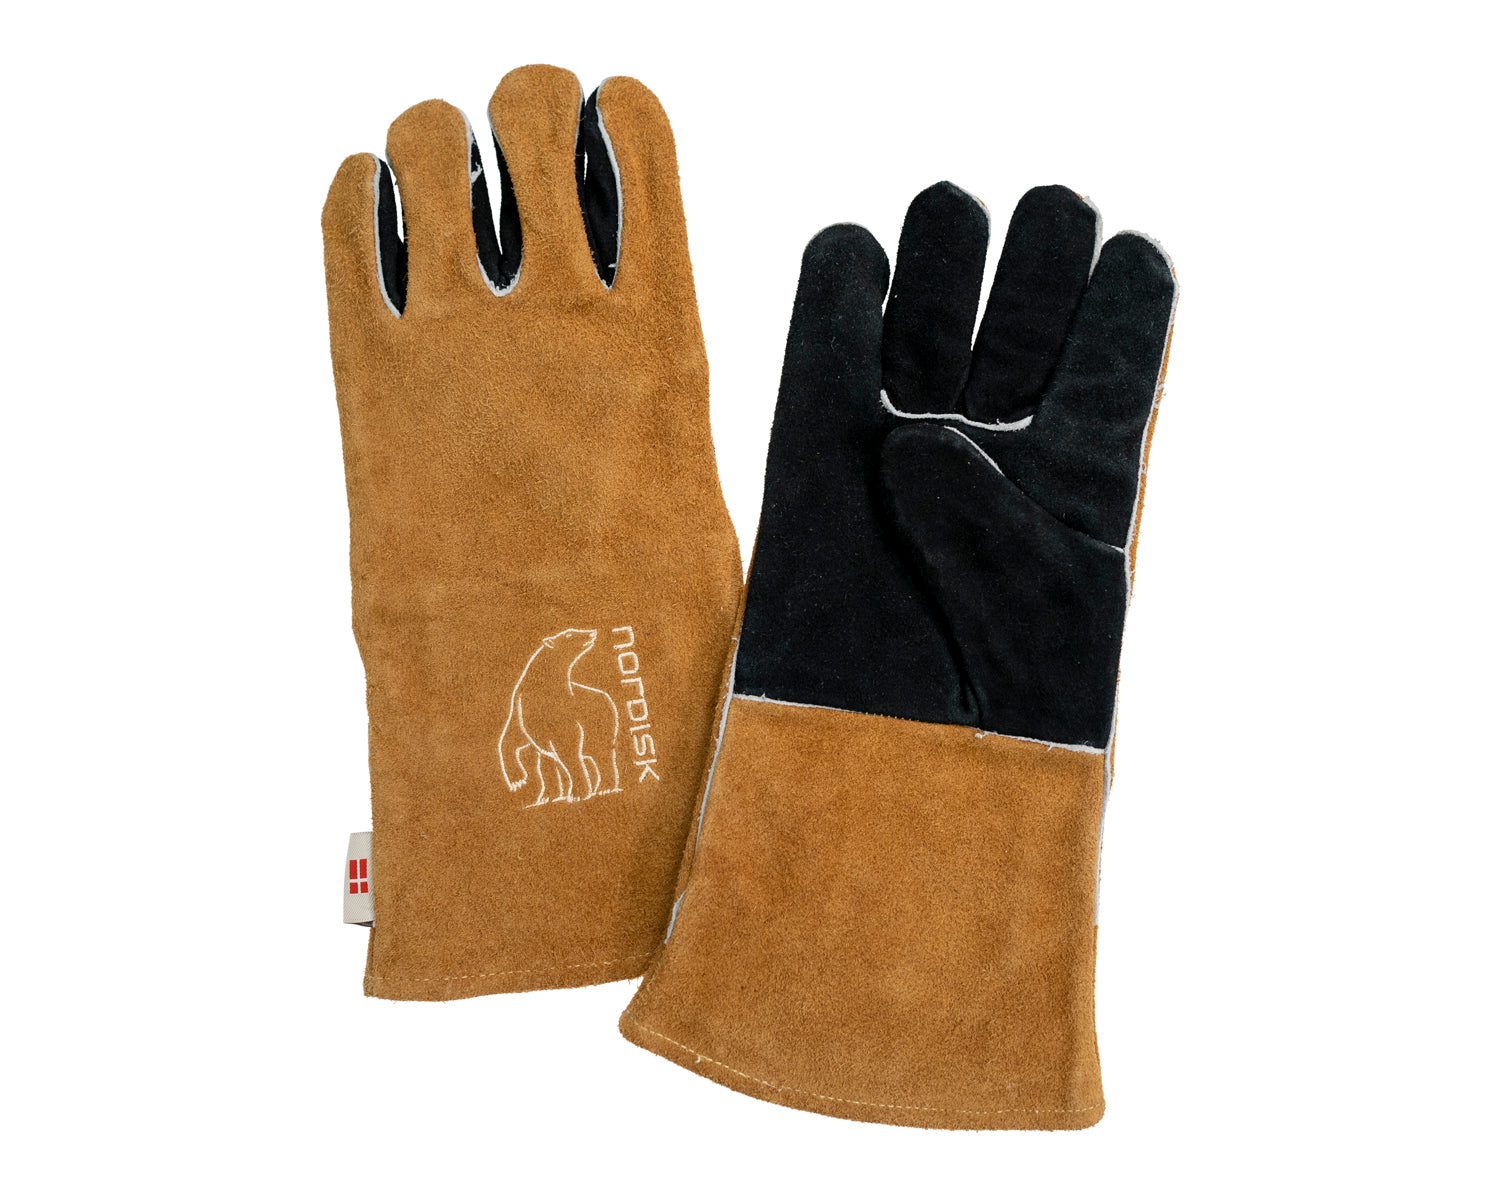 Torden gloves - Brown/Black